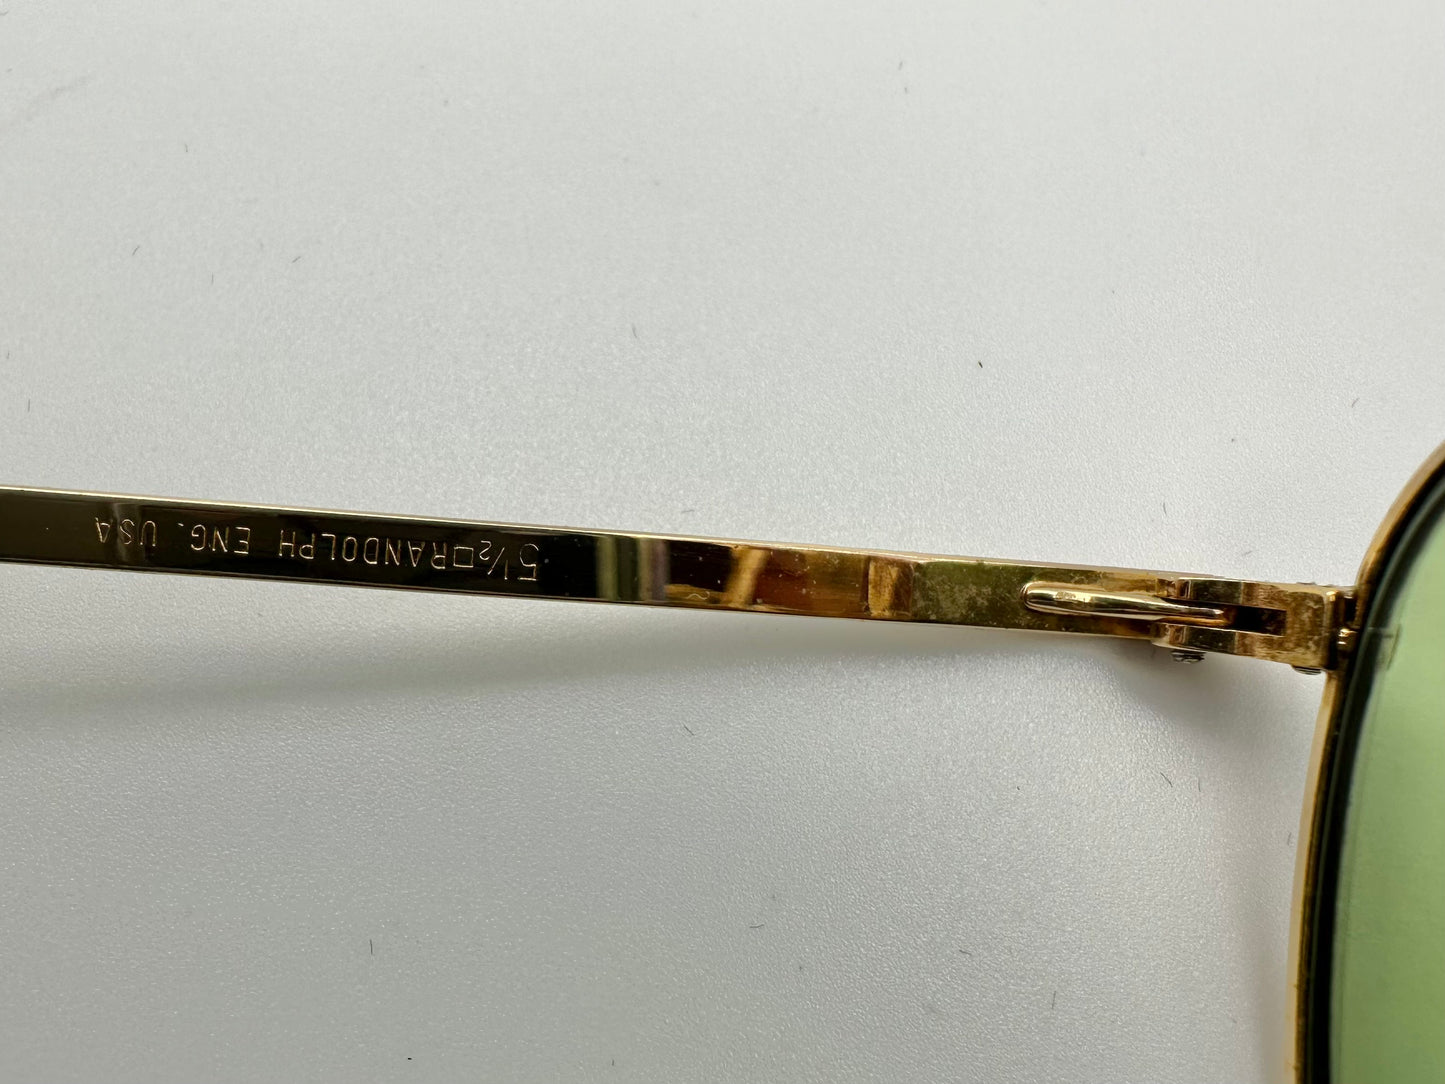 Rare Vintage Randolph Engineering 1990s 55mm Gold Green sunglasses